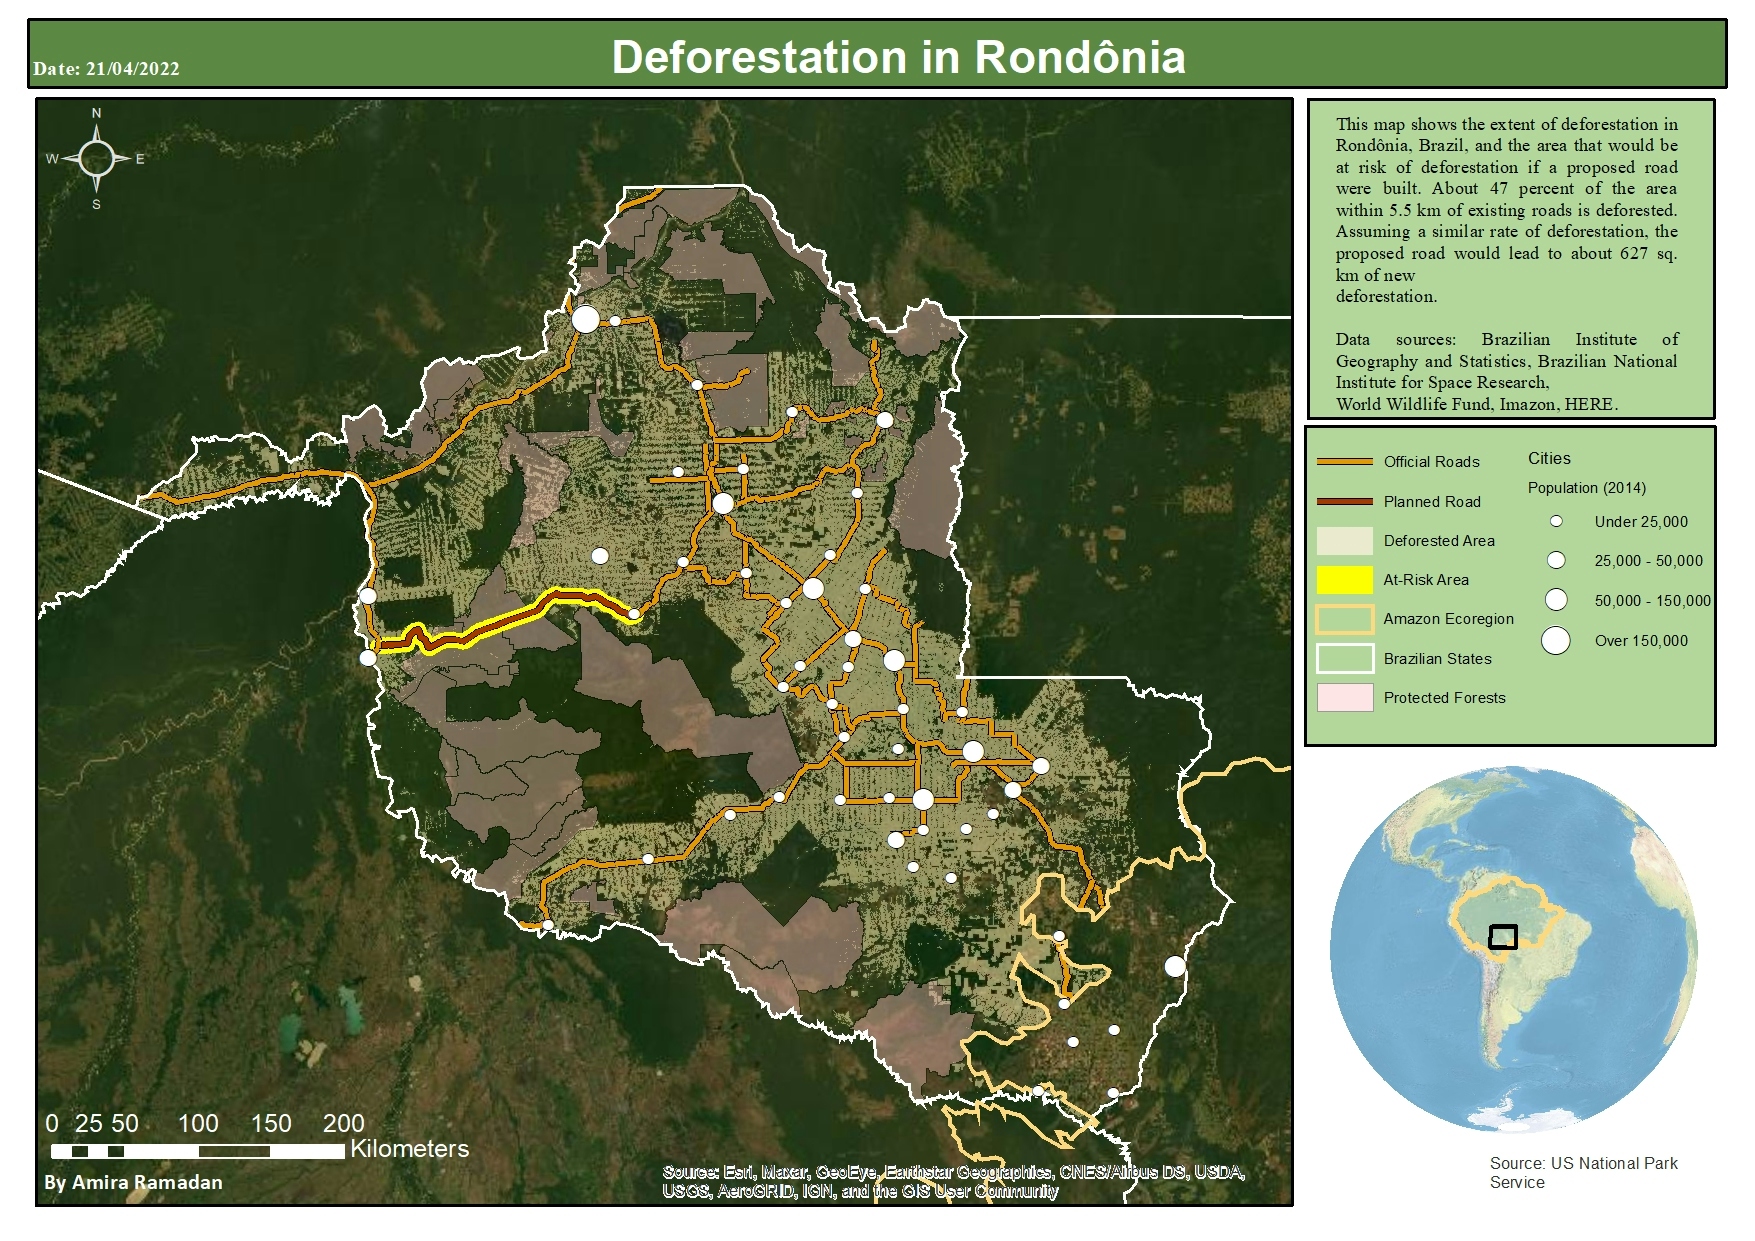 Deforestation in Rondonia, Brazil